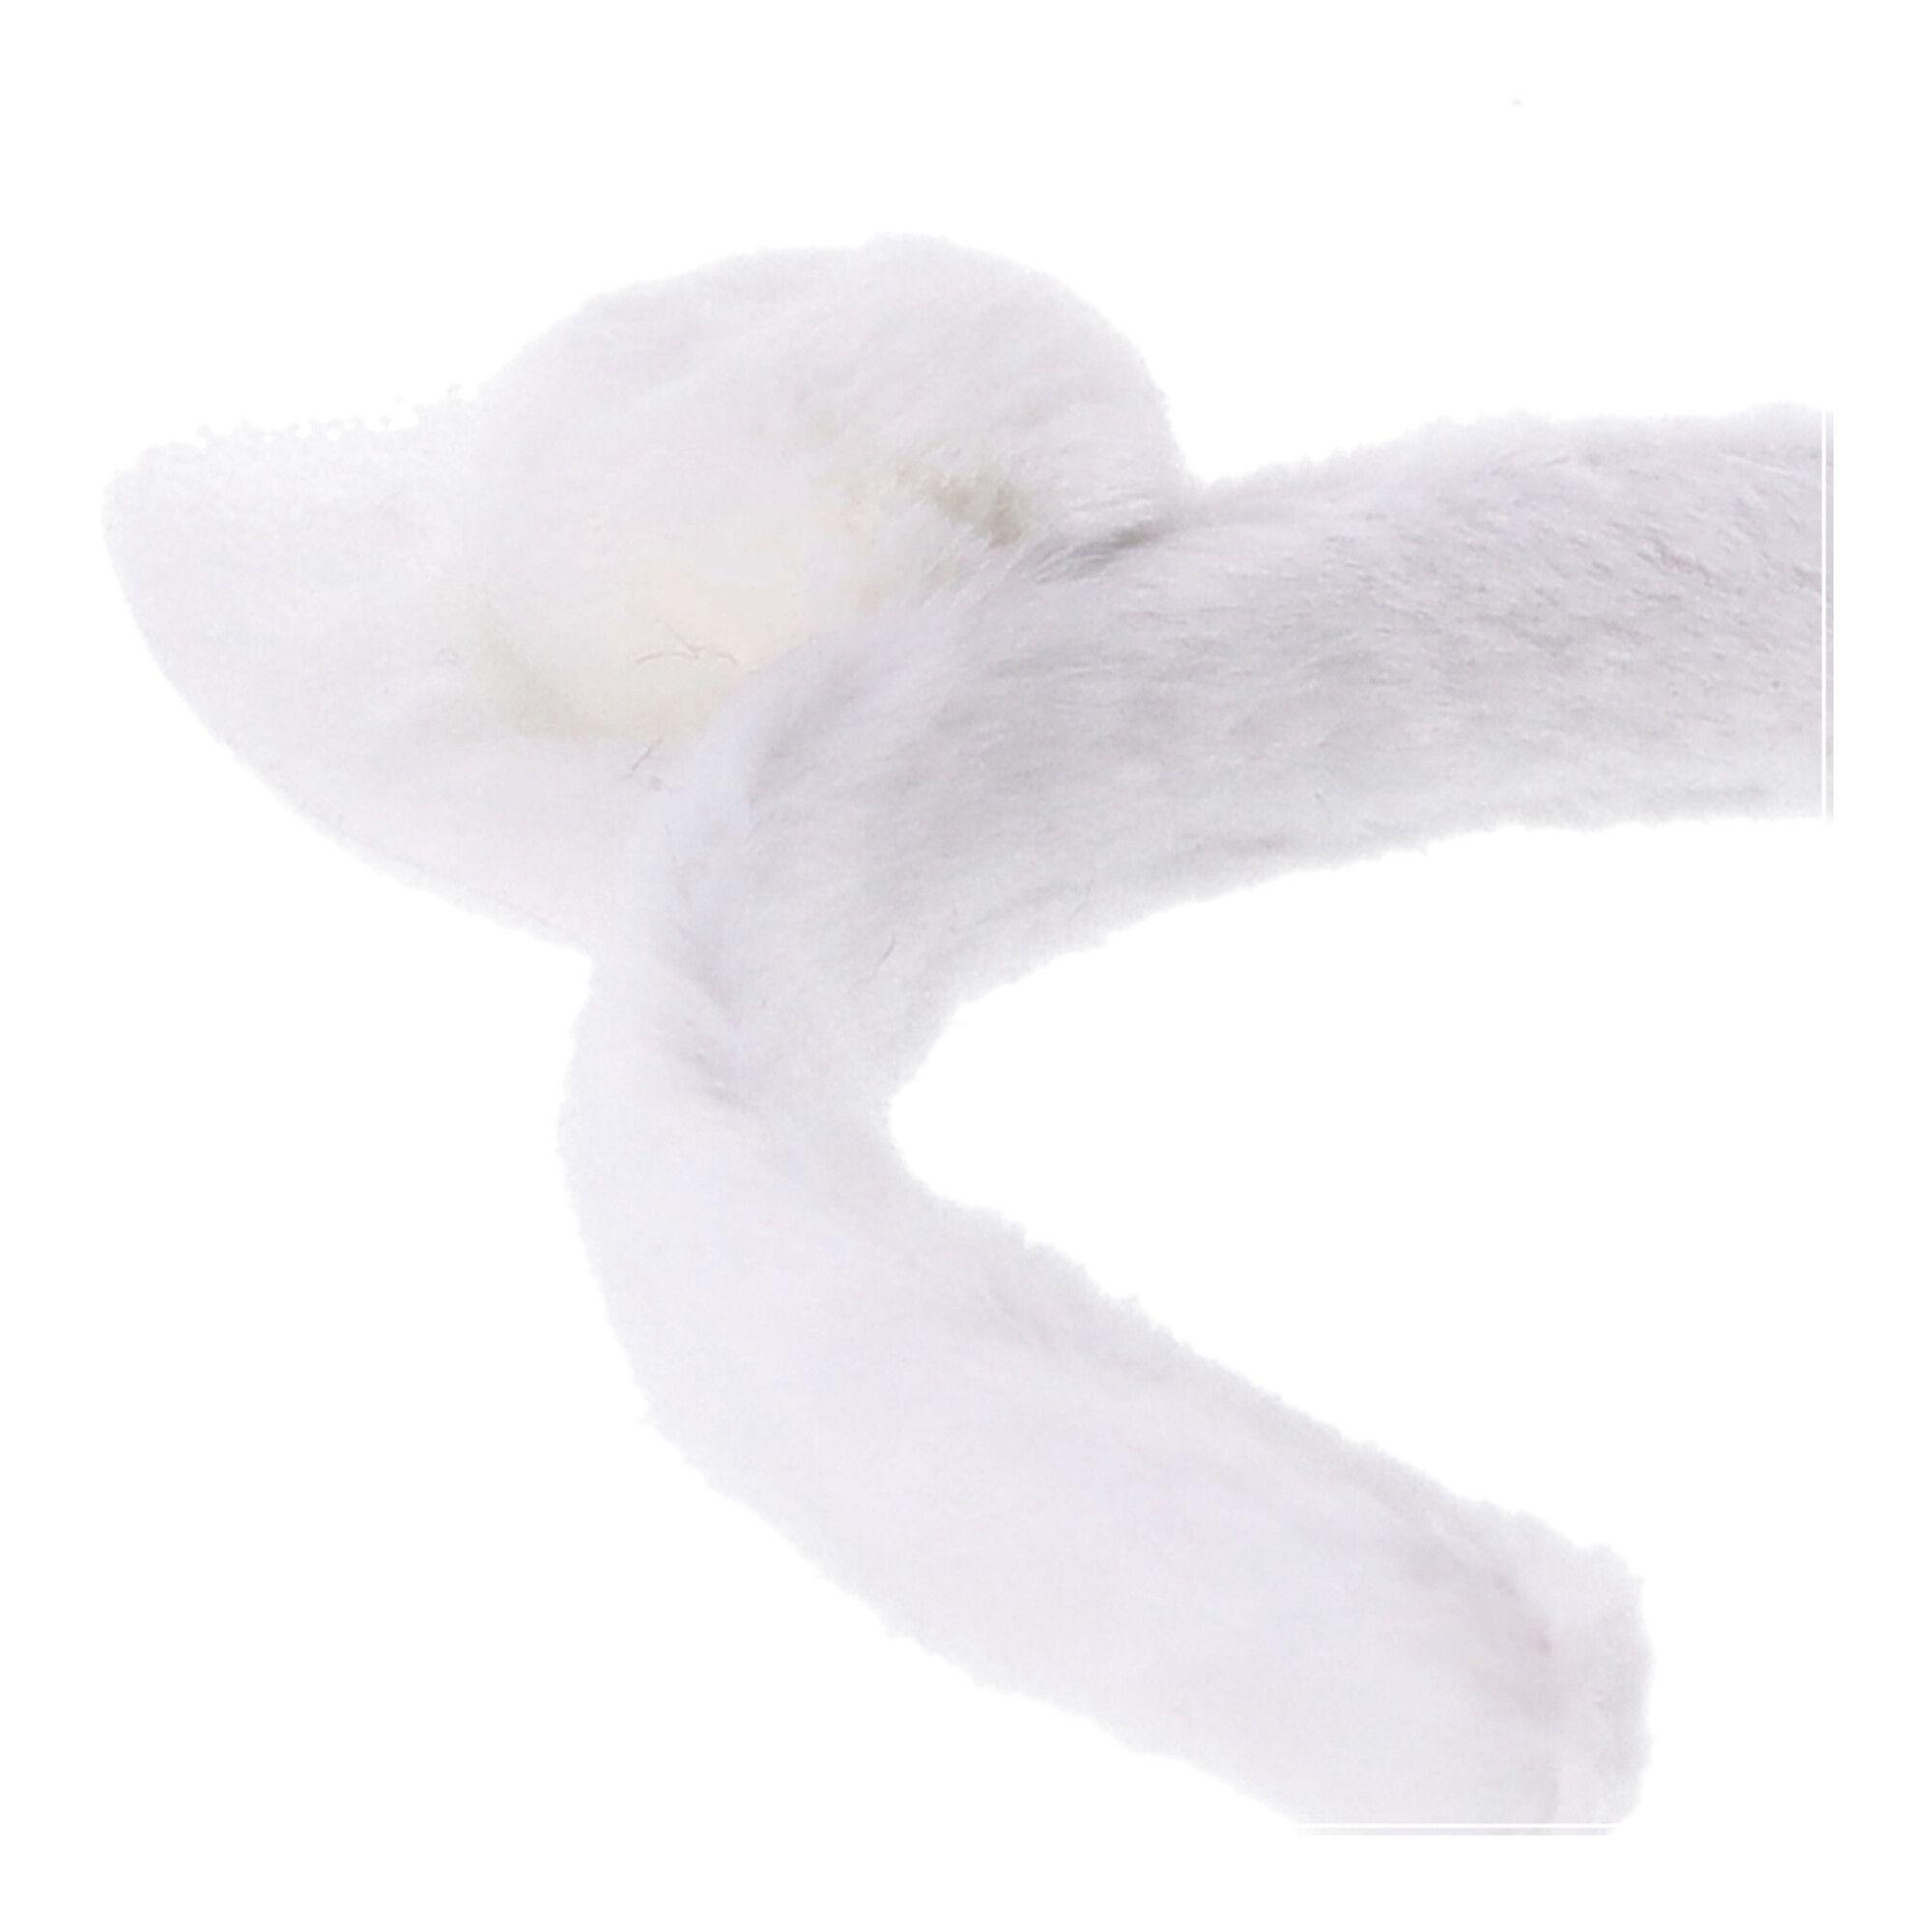 Plush headband with cat ears - white.